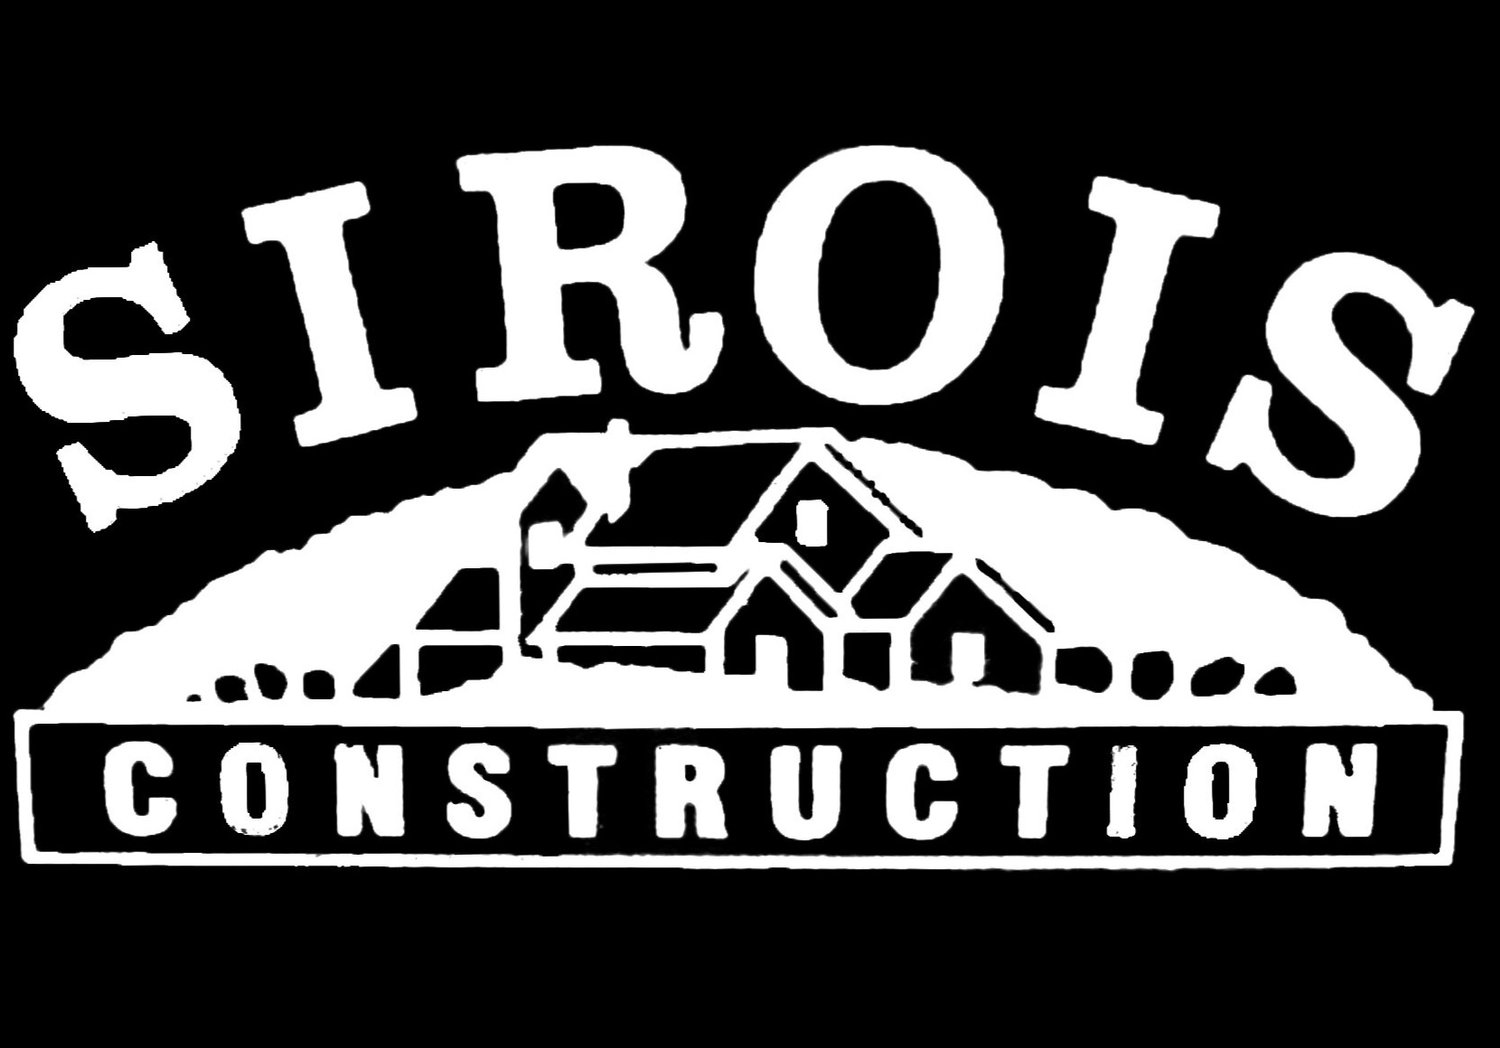 SIROIS CONSTRUCTION